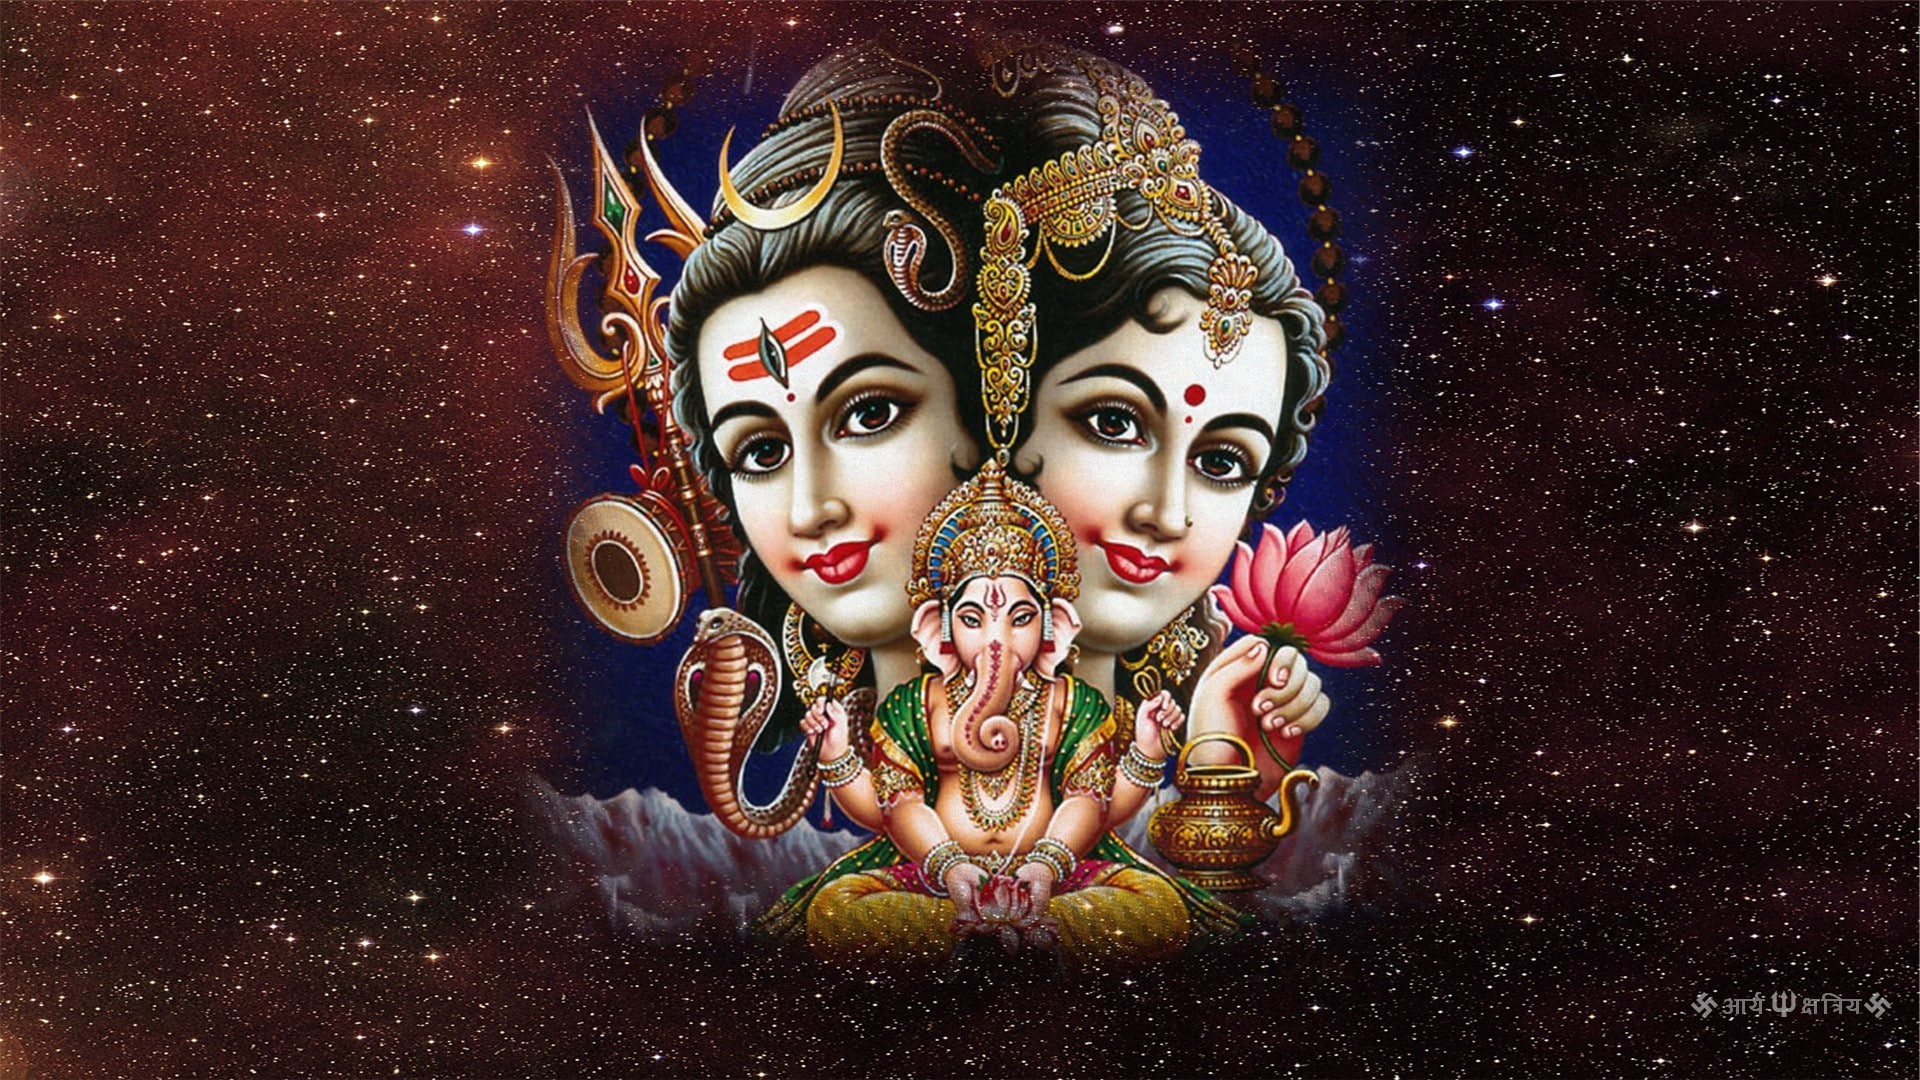 1920x1080, religion, hinduism, shiva, Parvati, Ganesha